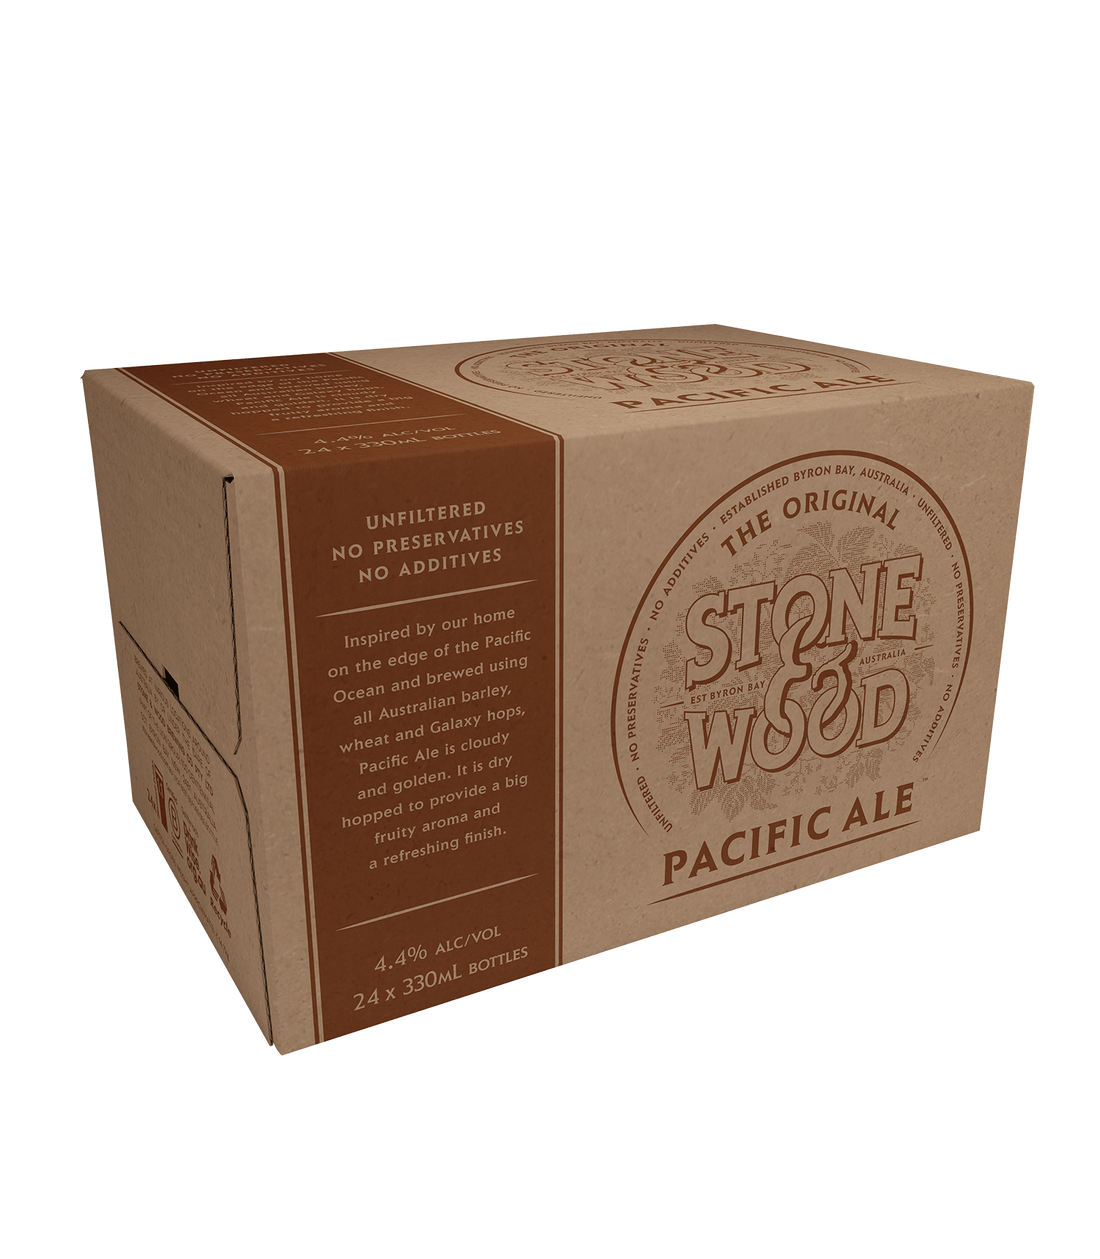 Stone & Wood Pacific Ale carton